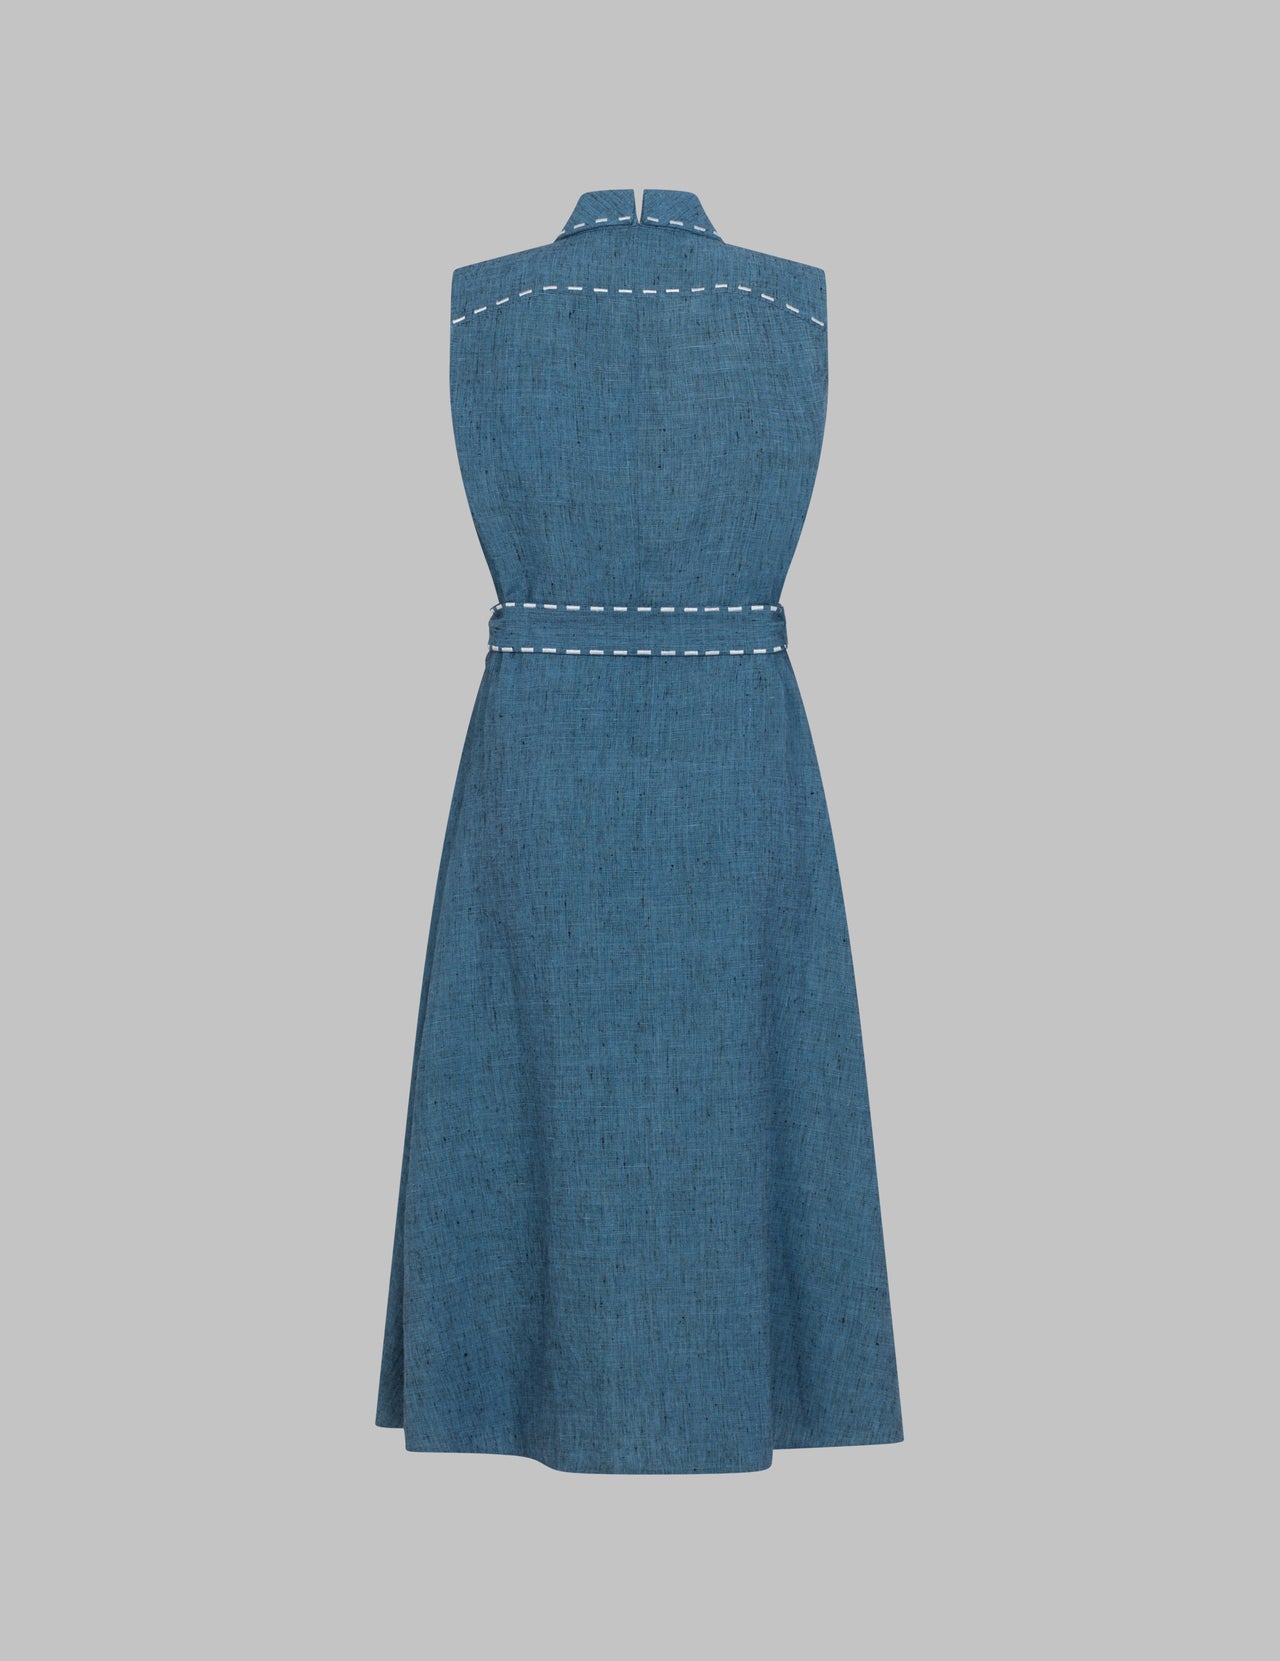  Blue Linen Sleeveless Midi Dress  